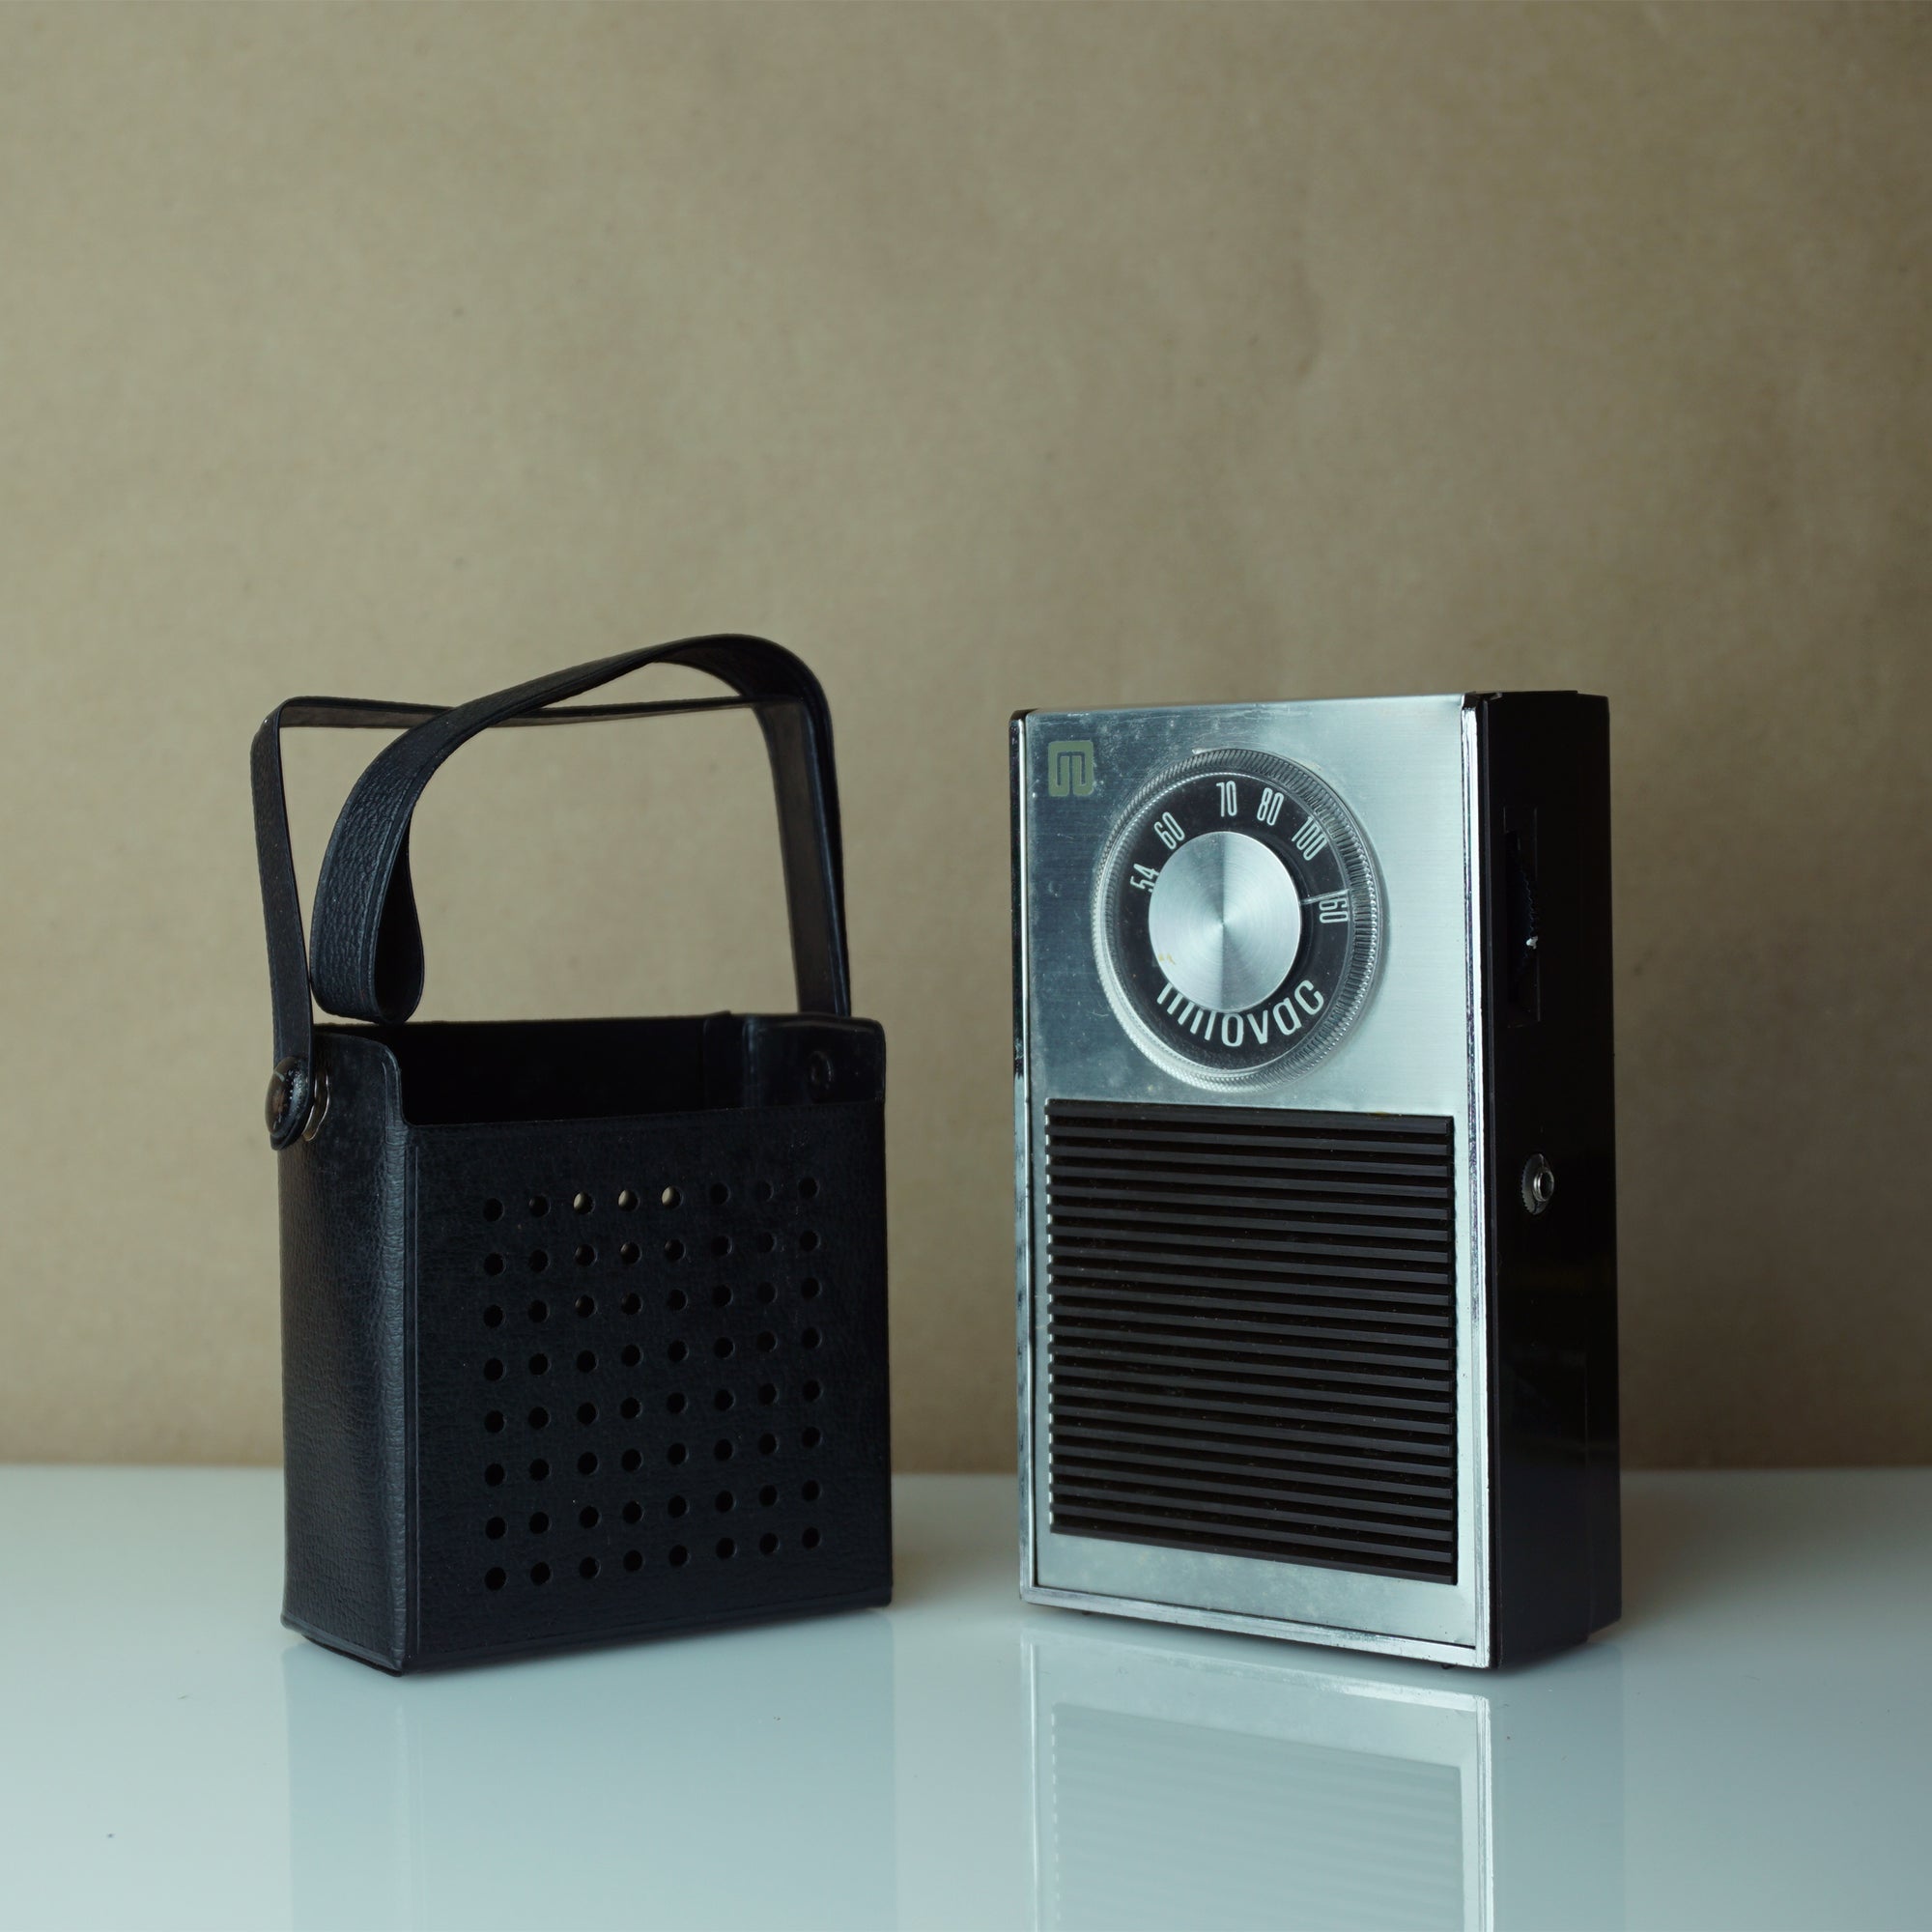 1965 Vintage MILOVAC PR-601 Transistor Radio w/ Bluetooth. Selectron International.